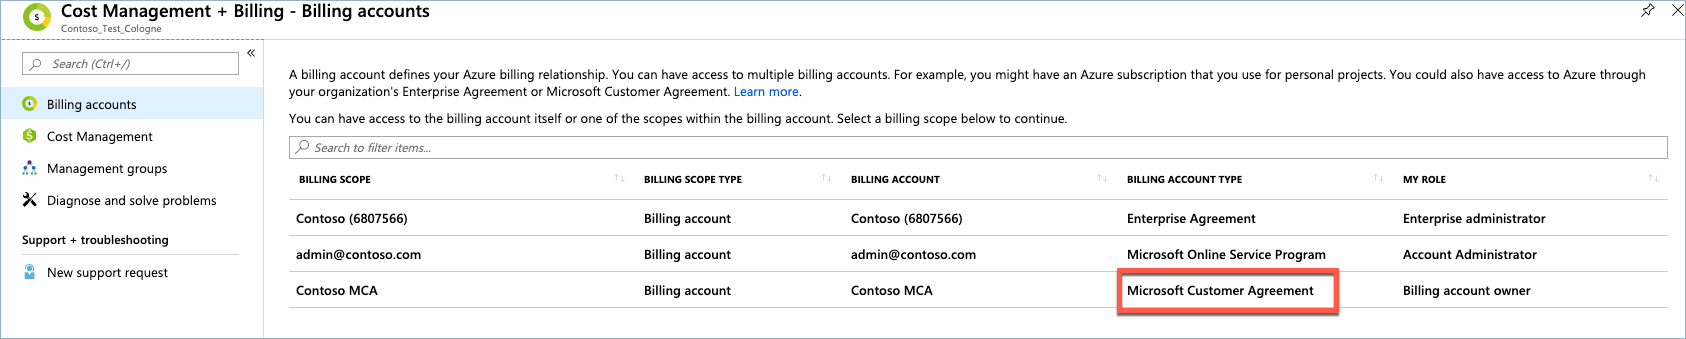 Contrato de cliente de Microsoft, Tipo de cuenta de facturación, Lista de cuentas de facturación, Microsoft Azure Portal